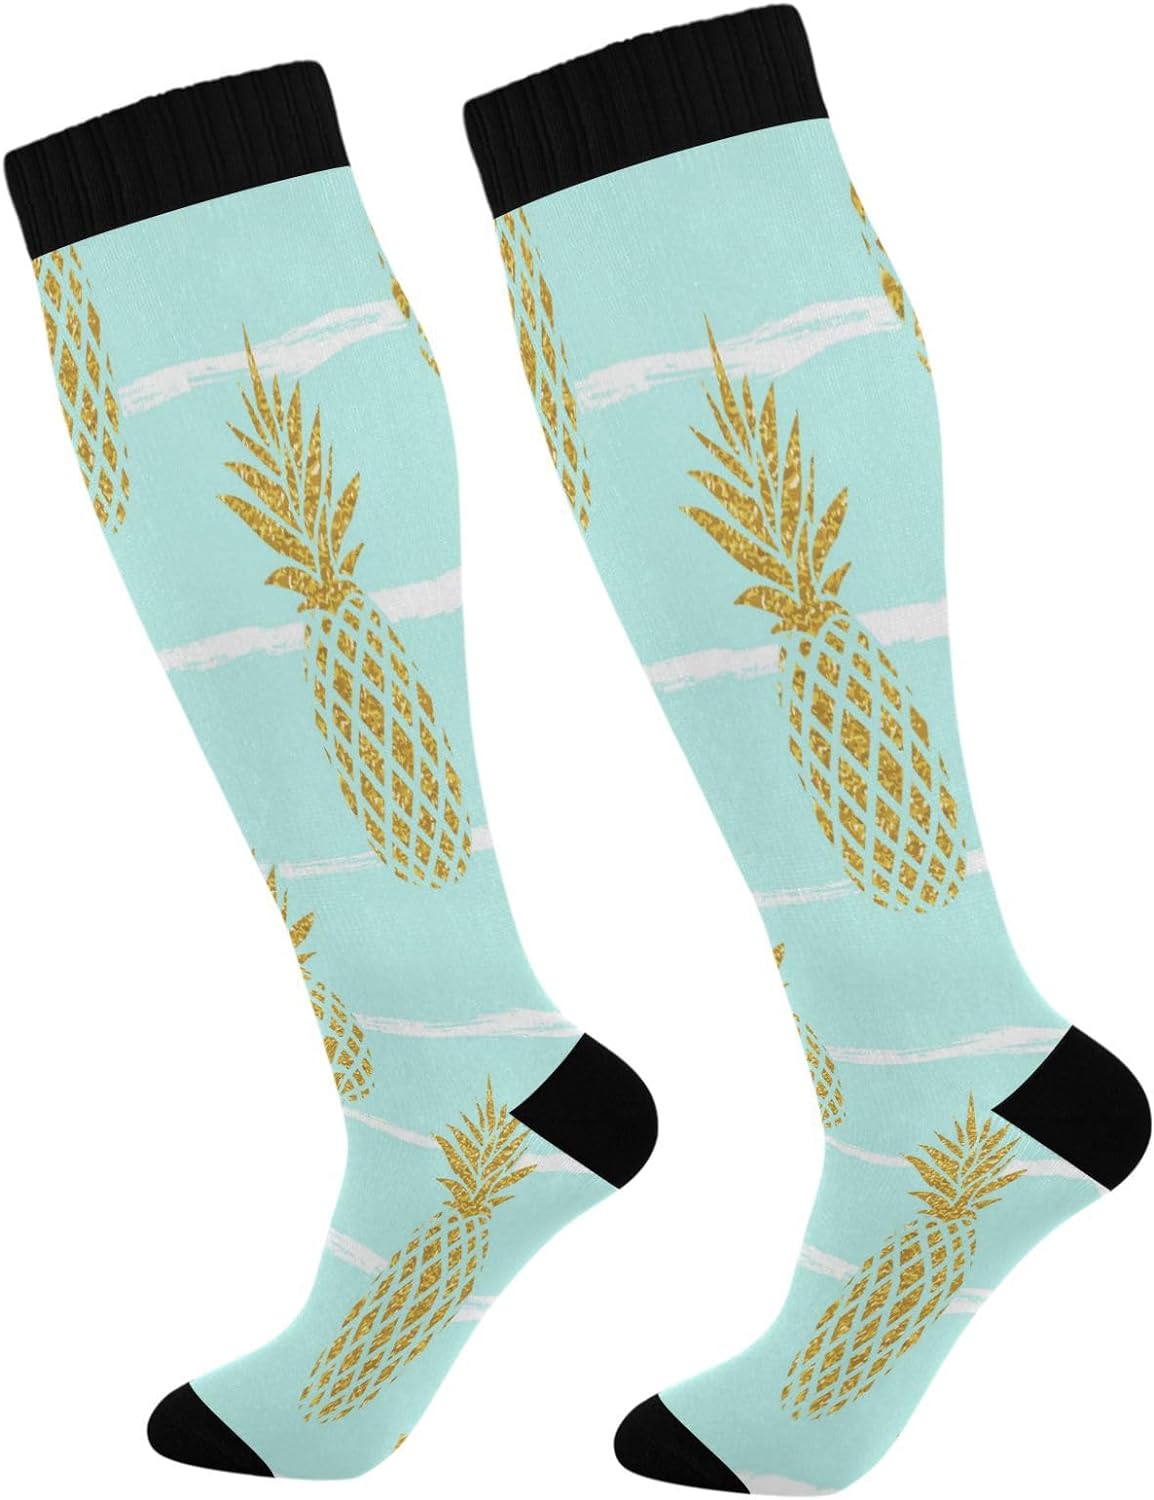 Coolnut Pineapple Compression Socks for Women Men, Circulation Knee ...